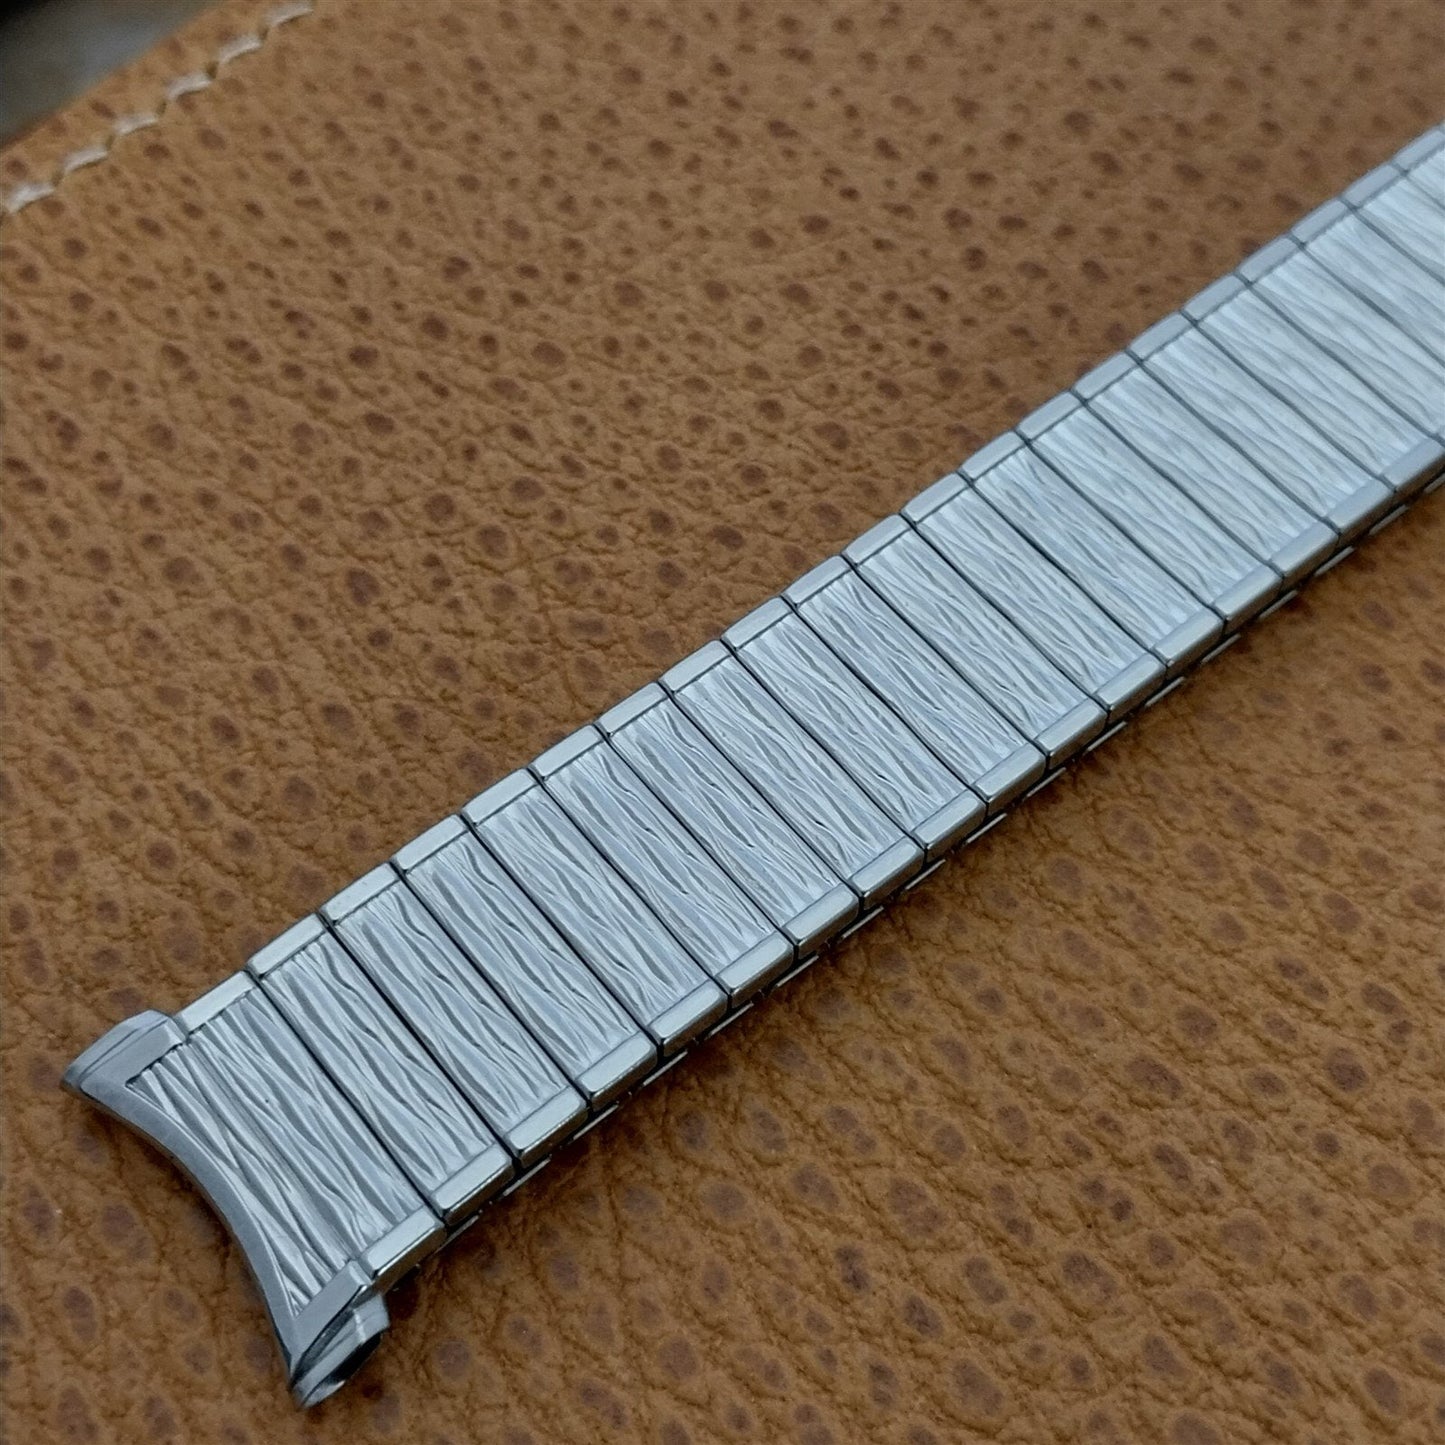 19mm 18mm Stainless Steel 1968 Speidel Long Valencia Unused Vintage Watch Band